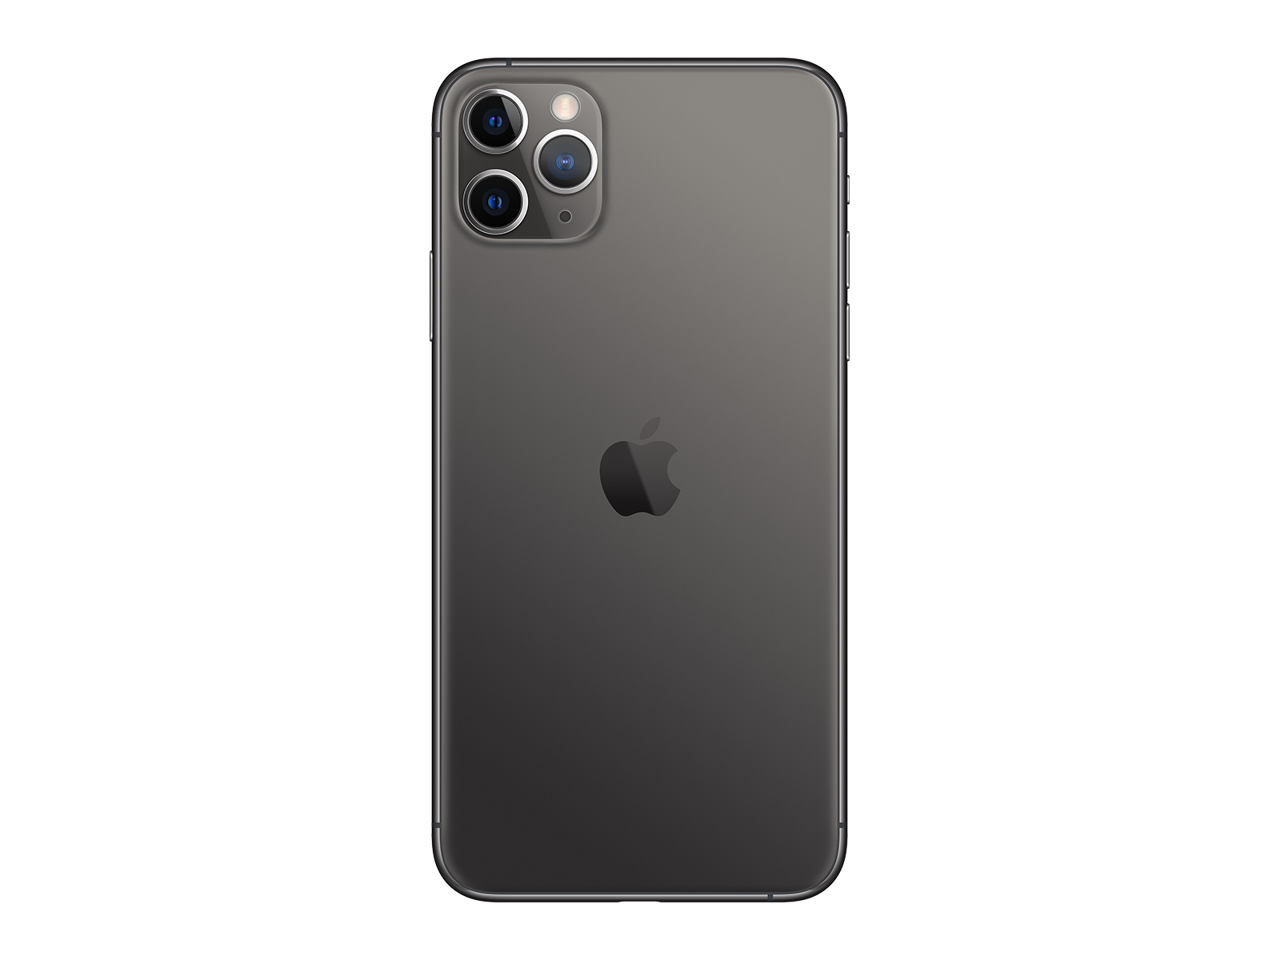 Apple - iPhone 11 Pro 64GB - Space Gray (Unlocked) - Newegg.com